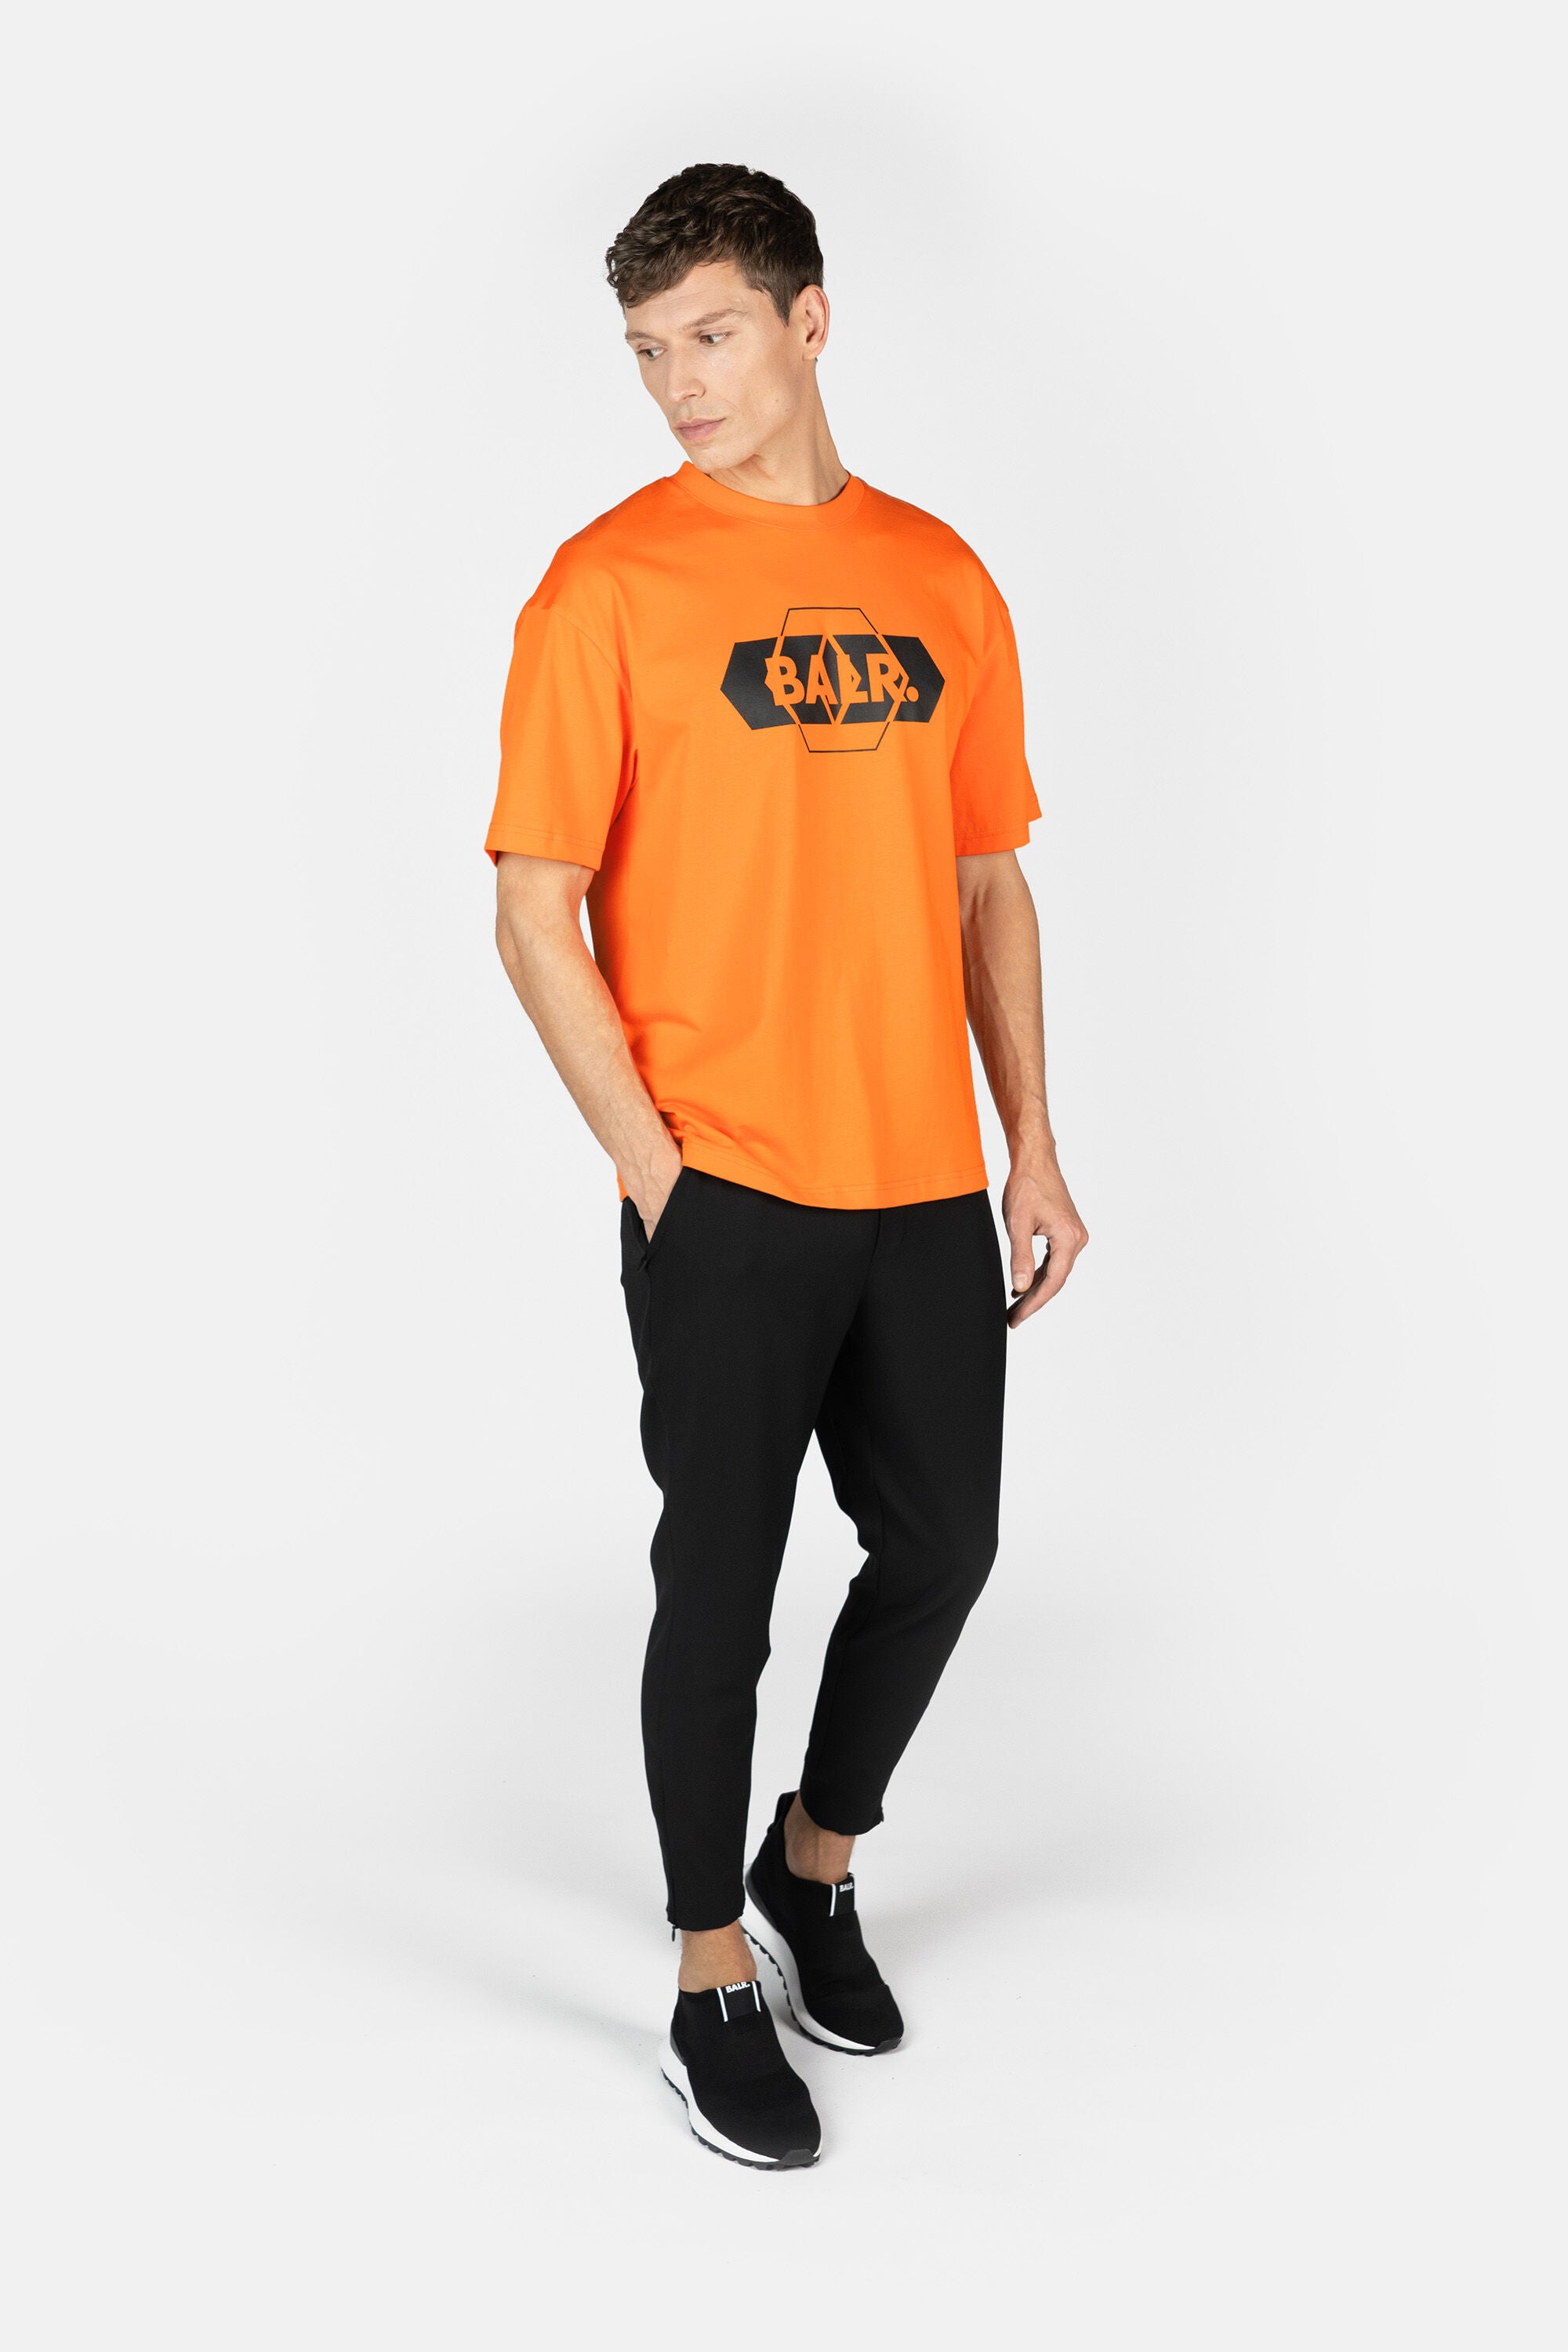 BALR. Form Box Fit T-Shirt Orange